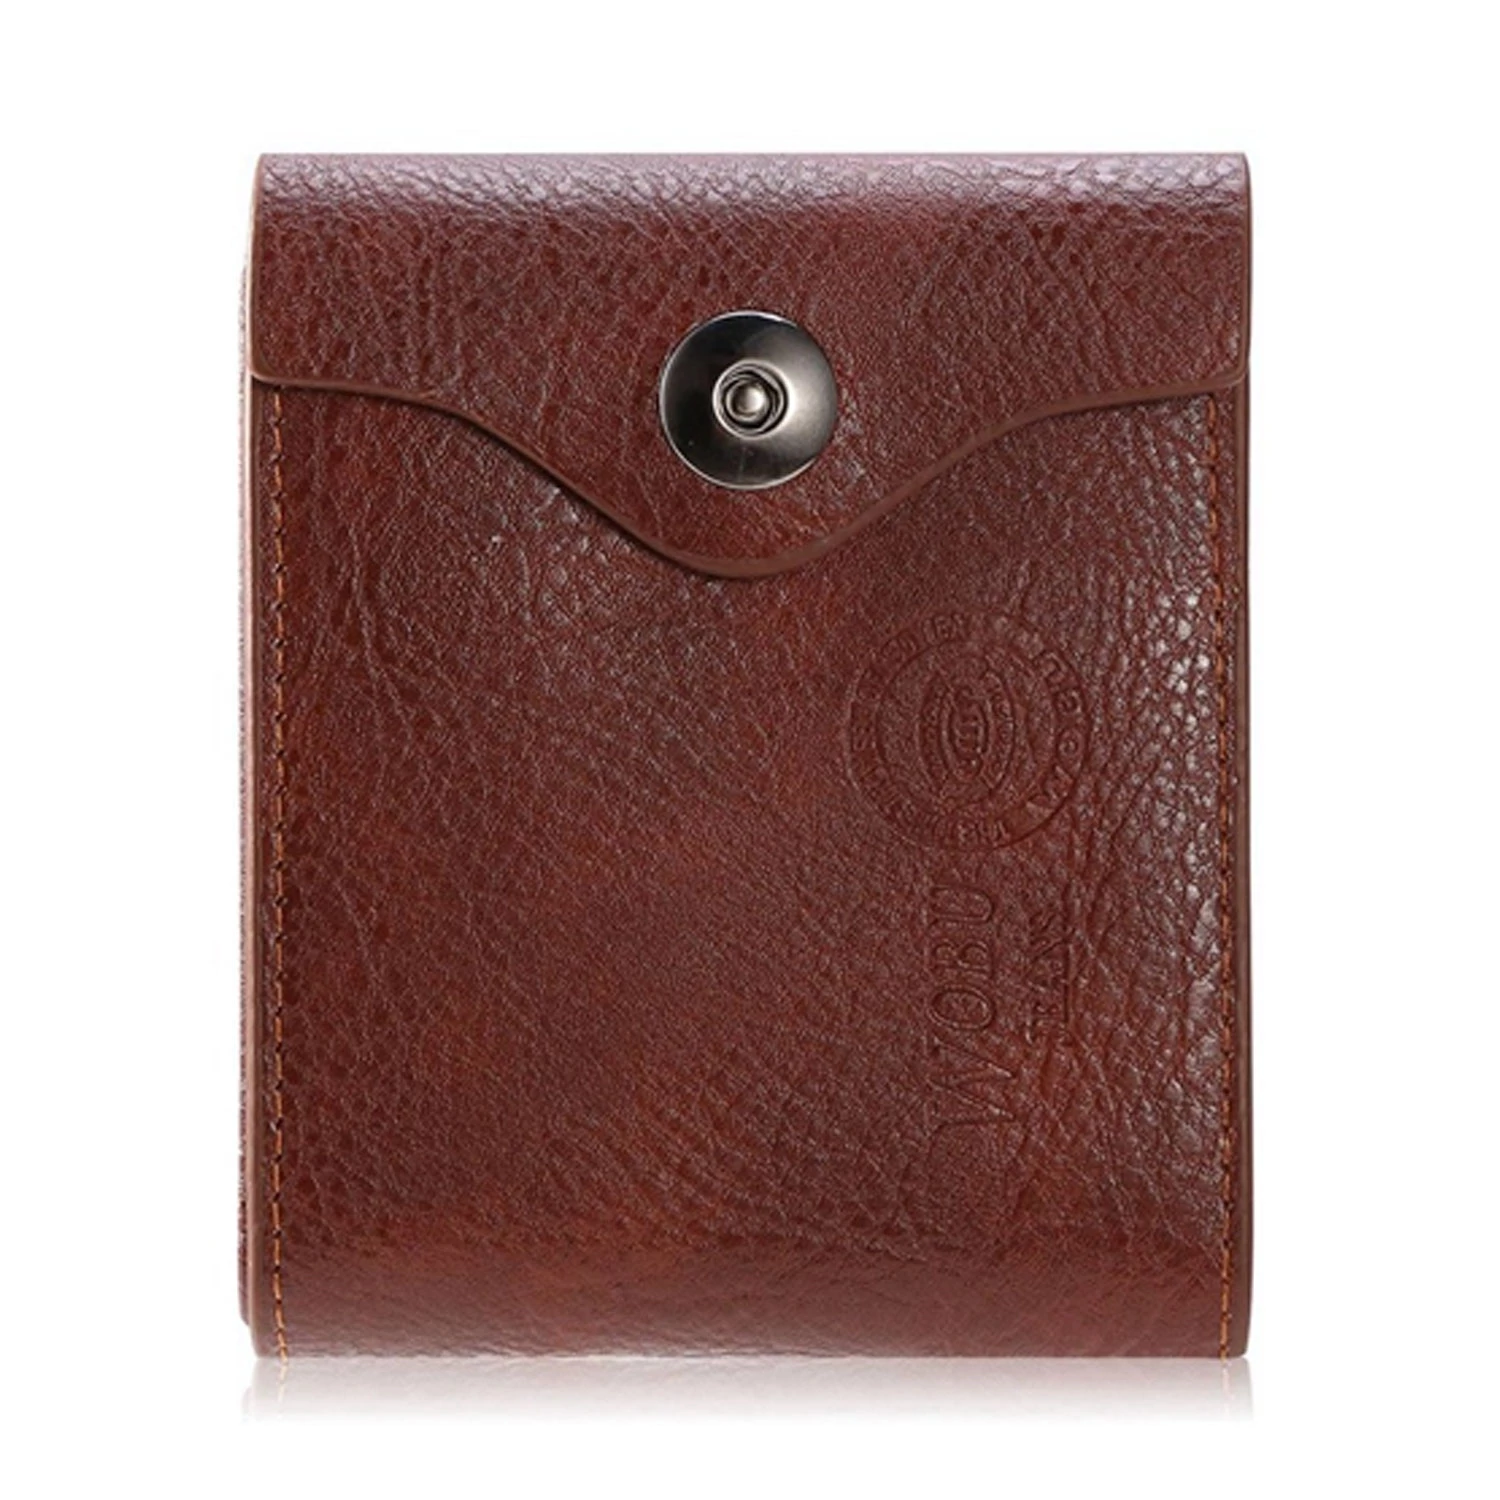 Men’s Wallet PU Leather Bifold Purse Slim RFID Blocking Card Holder Cases W/ 2 ID Window Coin Pocket